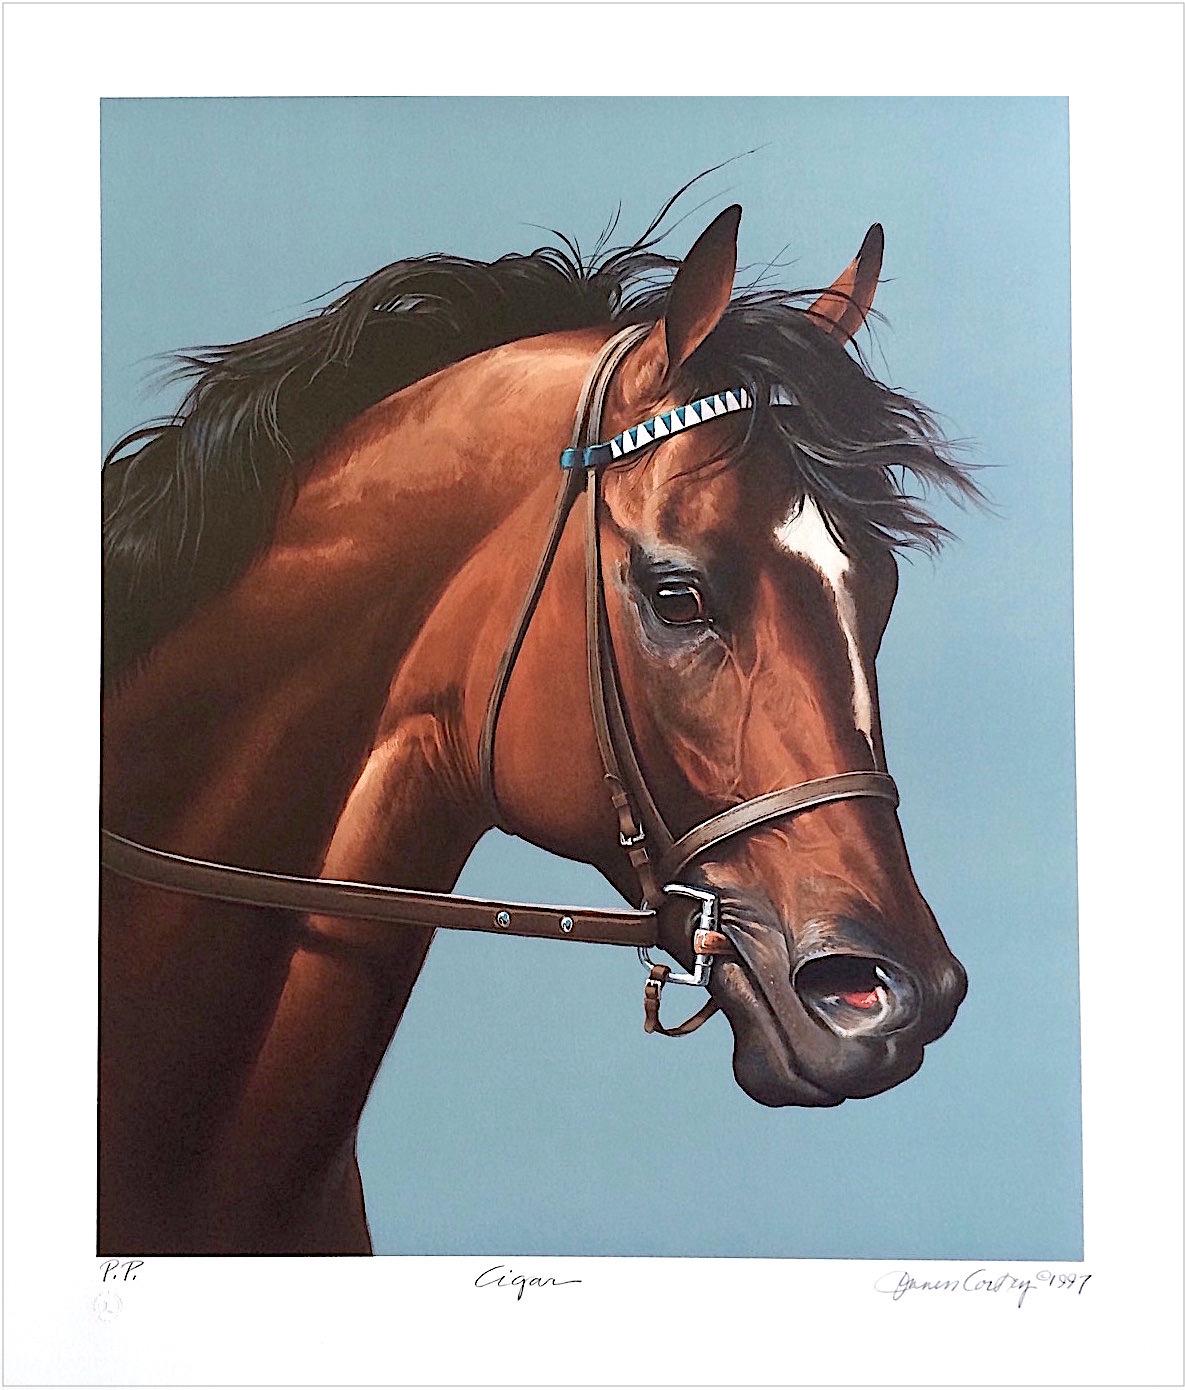 Jenness Cortez Animal Print - CIGAR-Champion Horse Portrait Signed Lithograph Equine Art, Horse Racing History